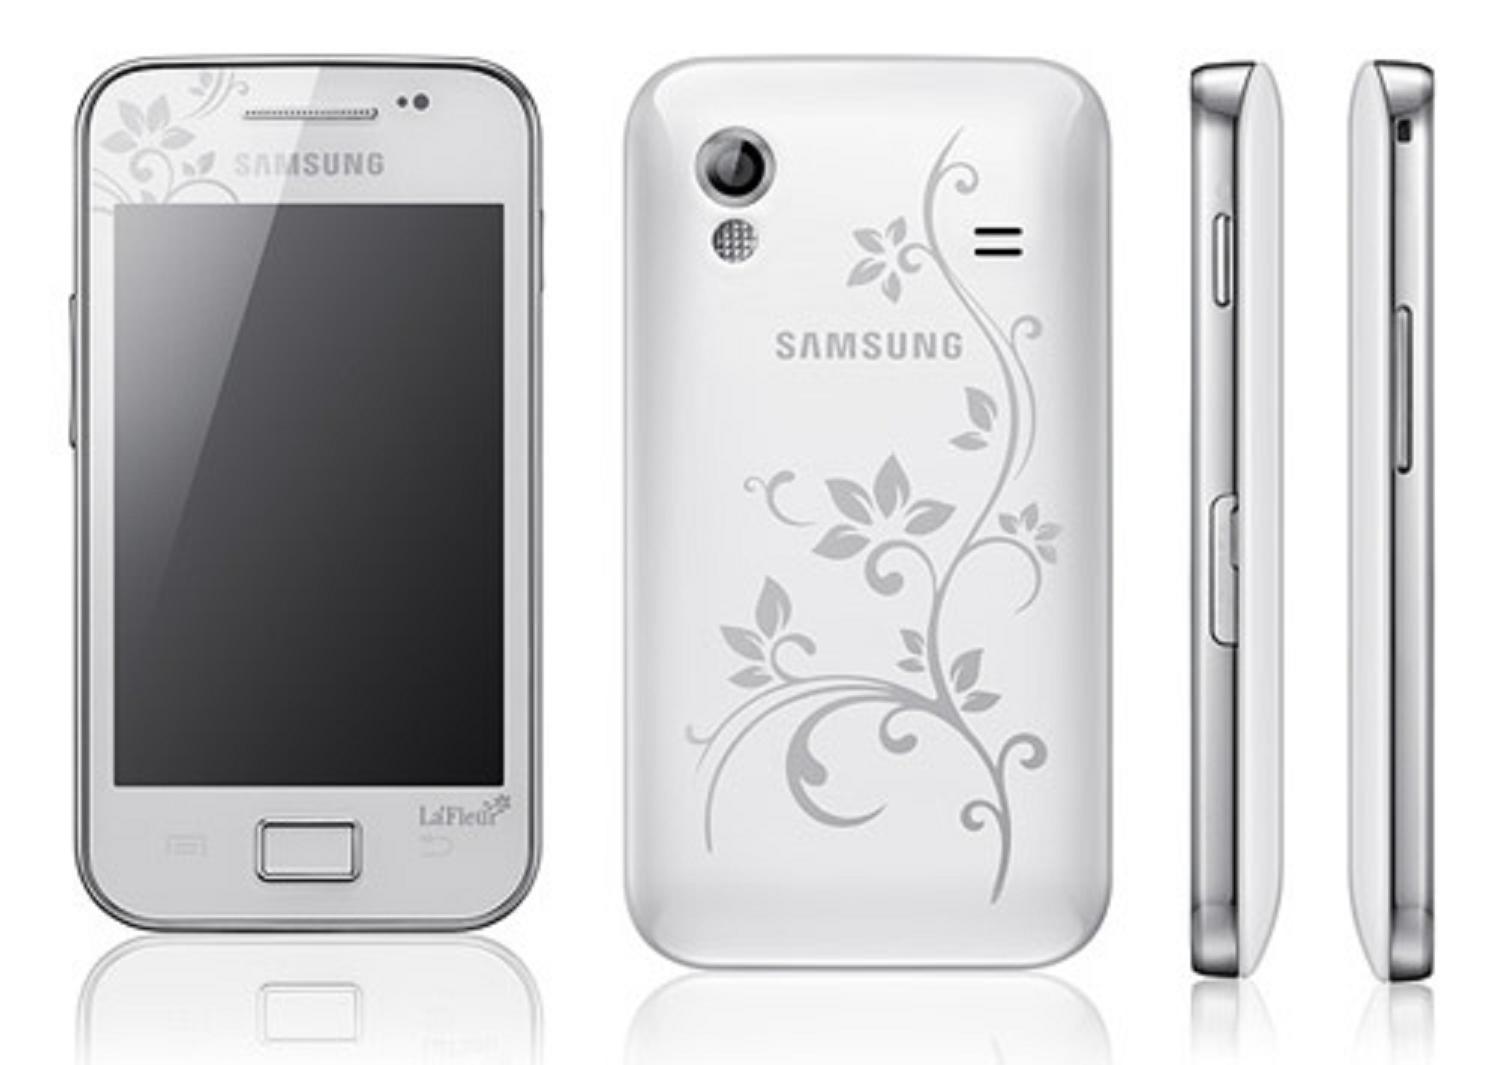 Телефон флер. Samsung Galaxy Ace la fleur gt-s5830i. Самсунг галакси Ace gt-s5830i. Самсунг gt s5510. Samsung la fleur 3.2 Mega.